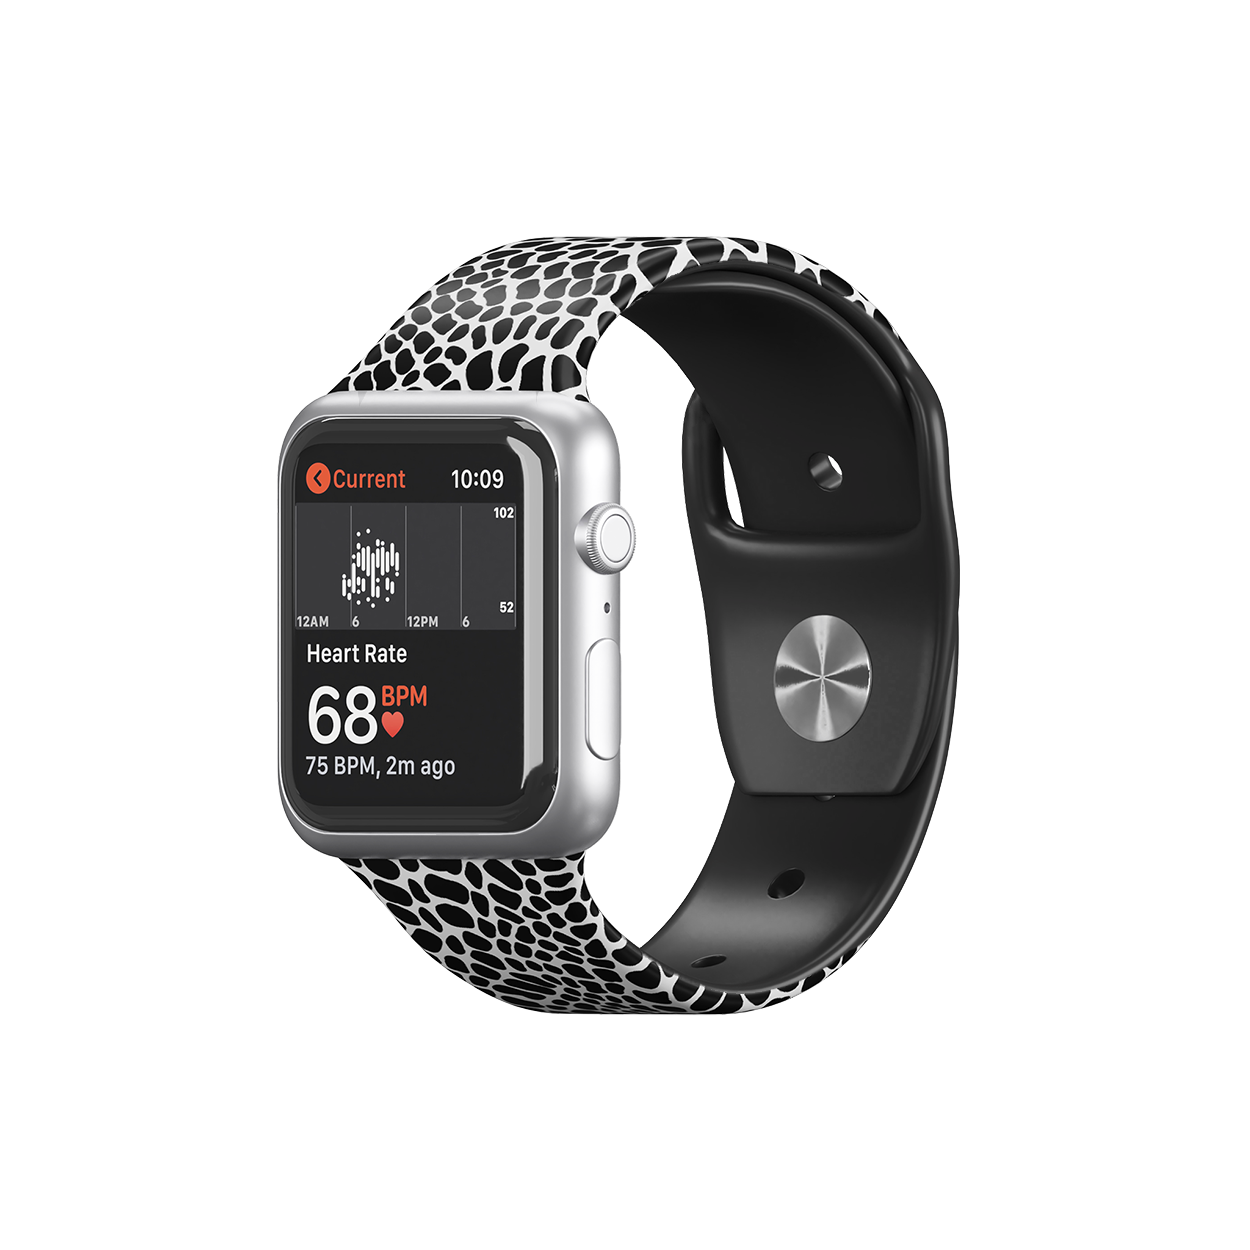 Apple Watch Band Black Croc